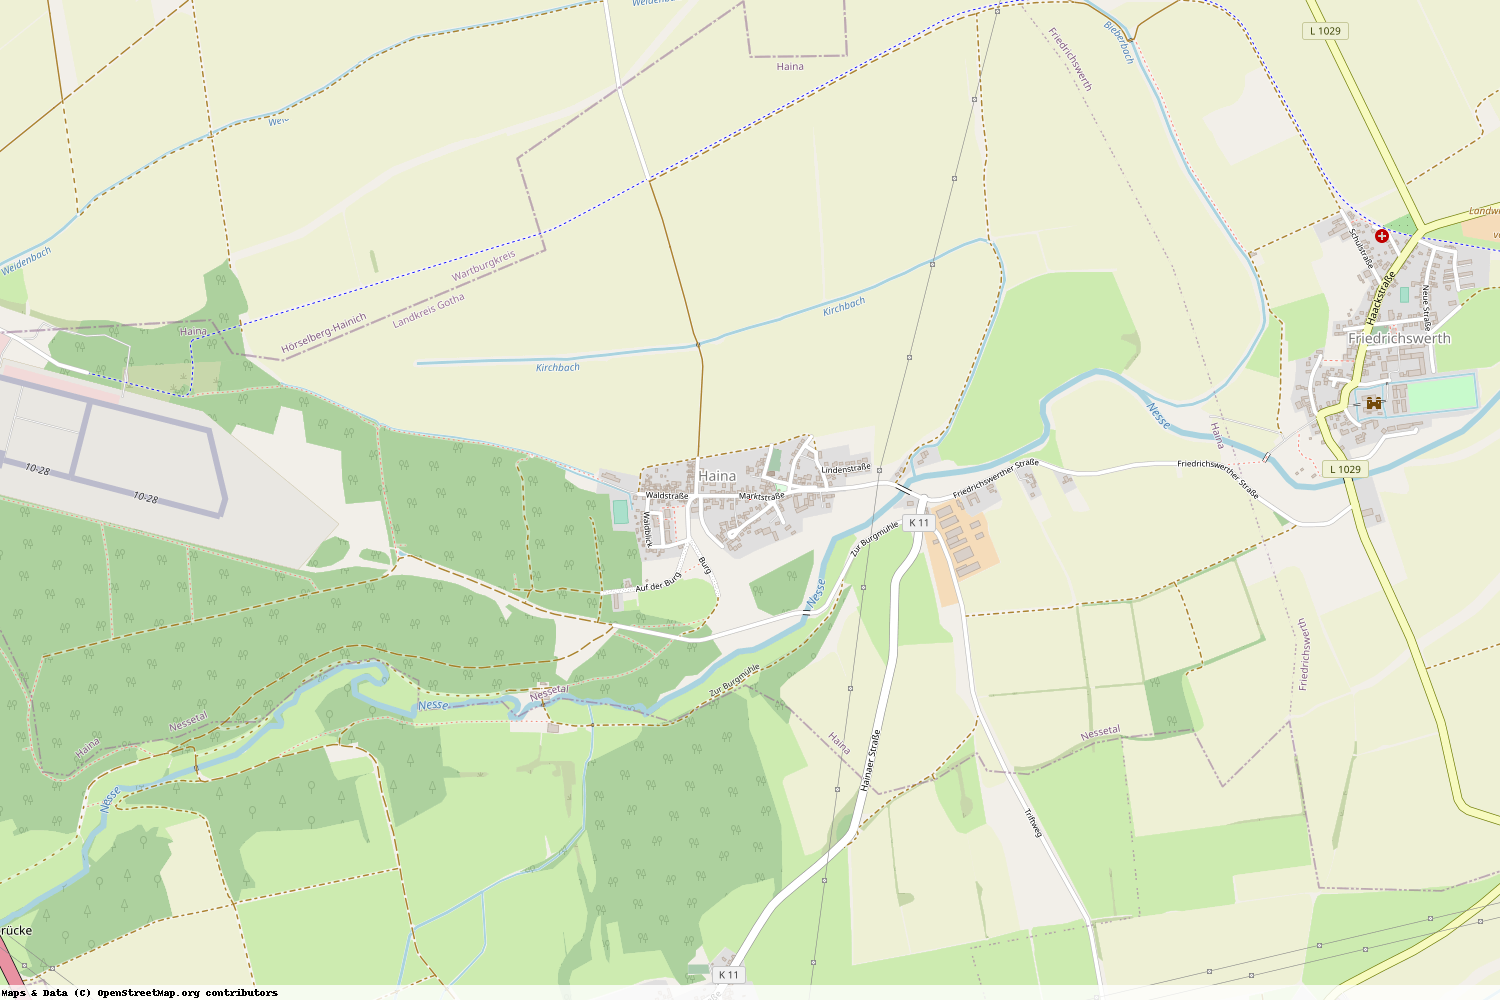 Ist gerade Stromausfall in Thüringen - Gotha - Haina?